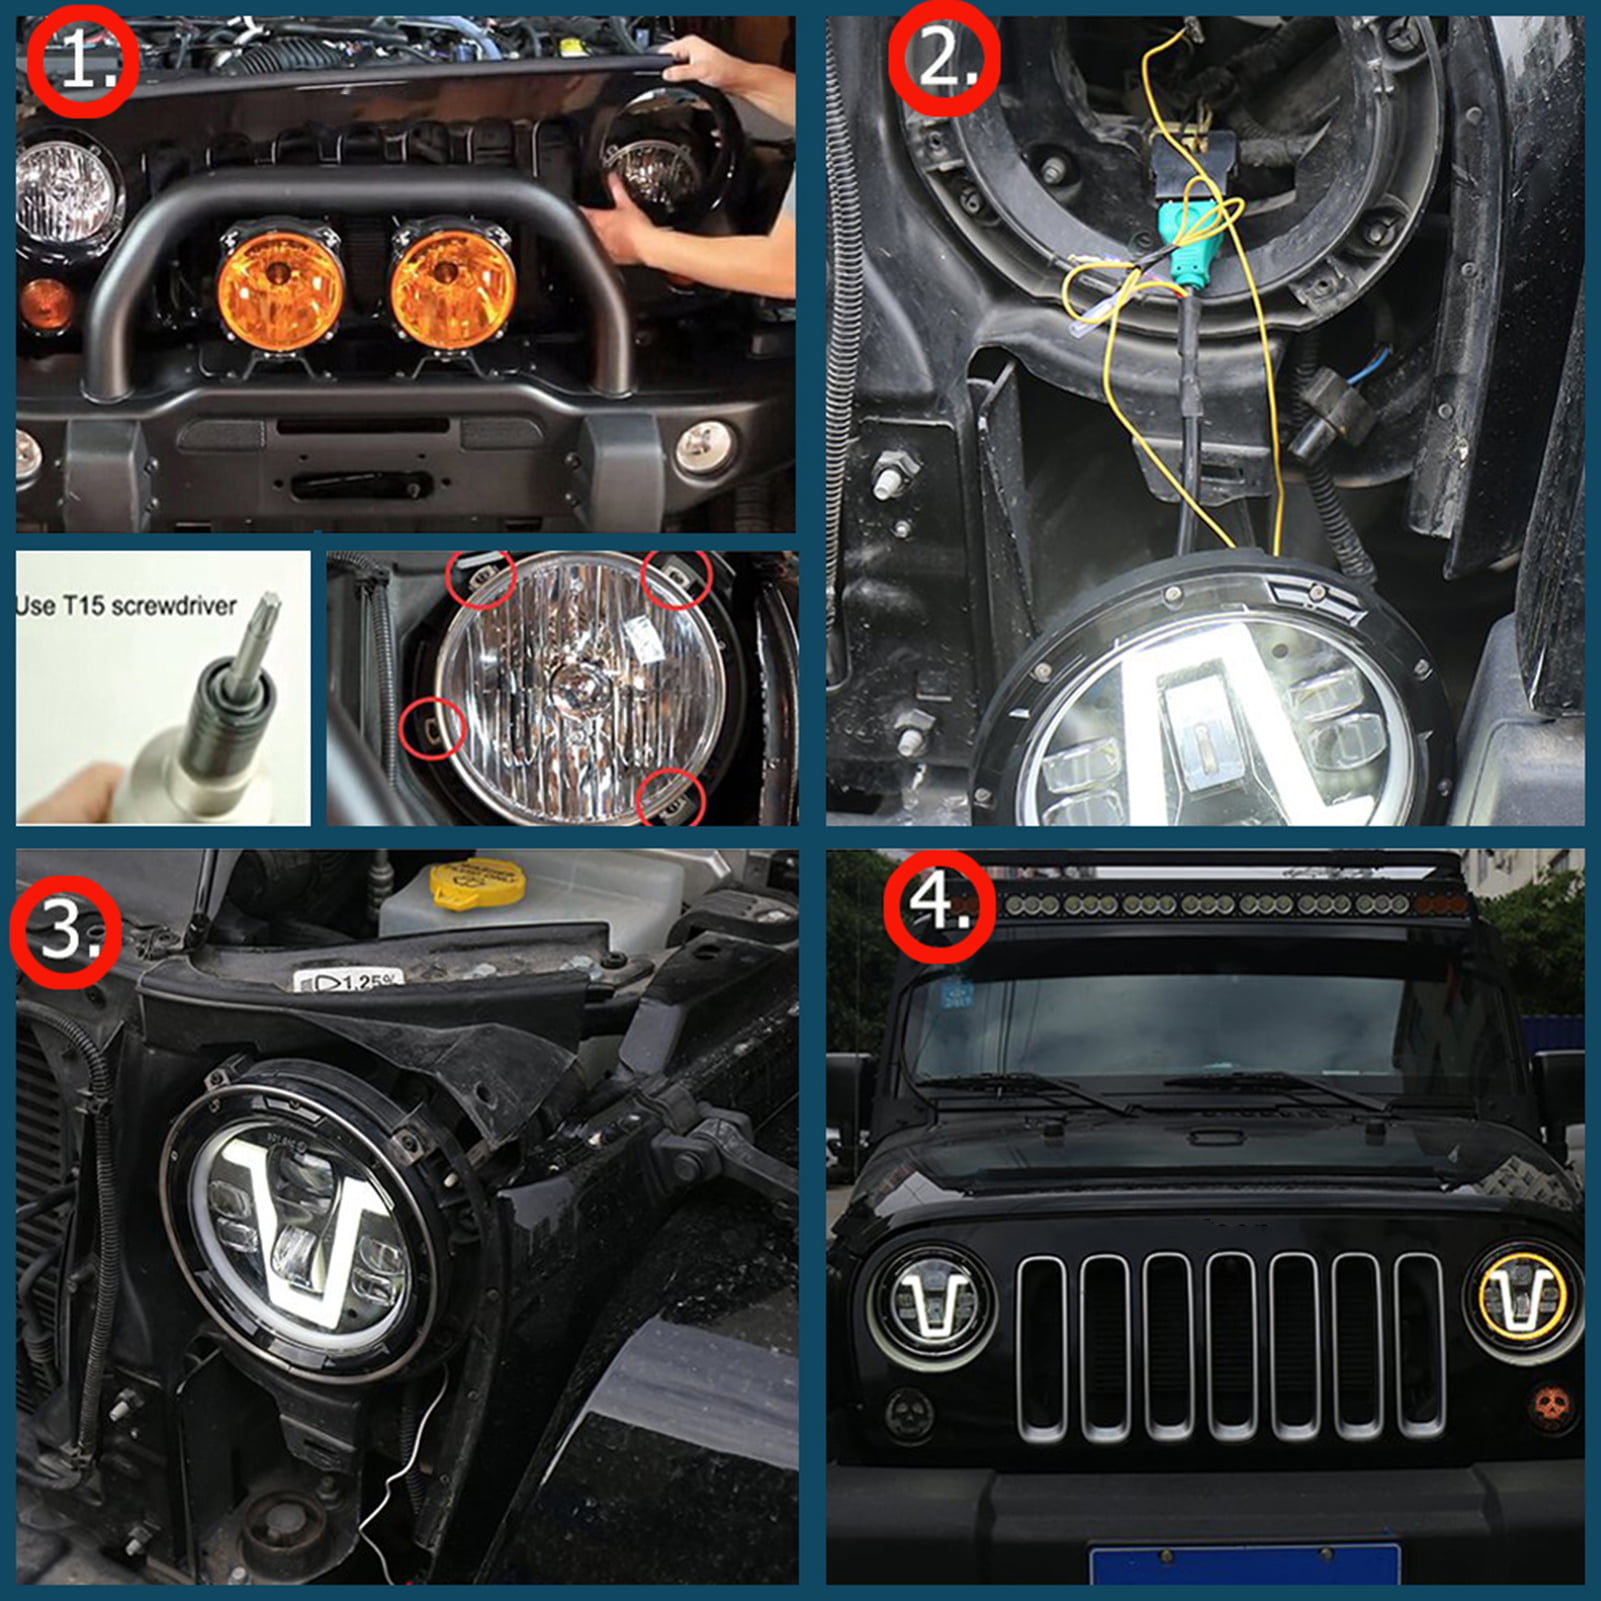 Walmeck 1pcs /24V Motorcycl Headlight 7'' V-shape LED Headlight with Turn  Signal Lights DRL Hi/Lo Beam Replacement for Jeep Wrangler JK JKU CJ LJ TJ  Hummer H2 